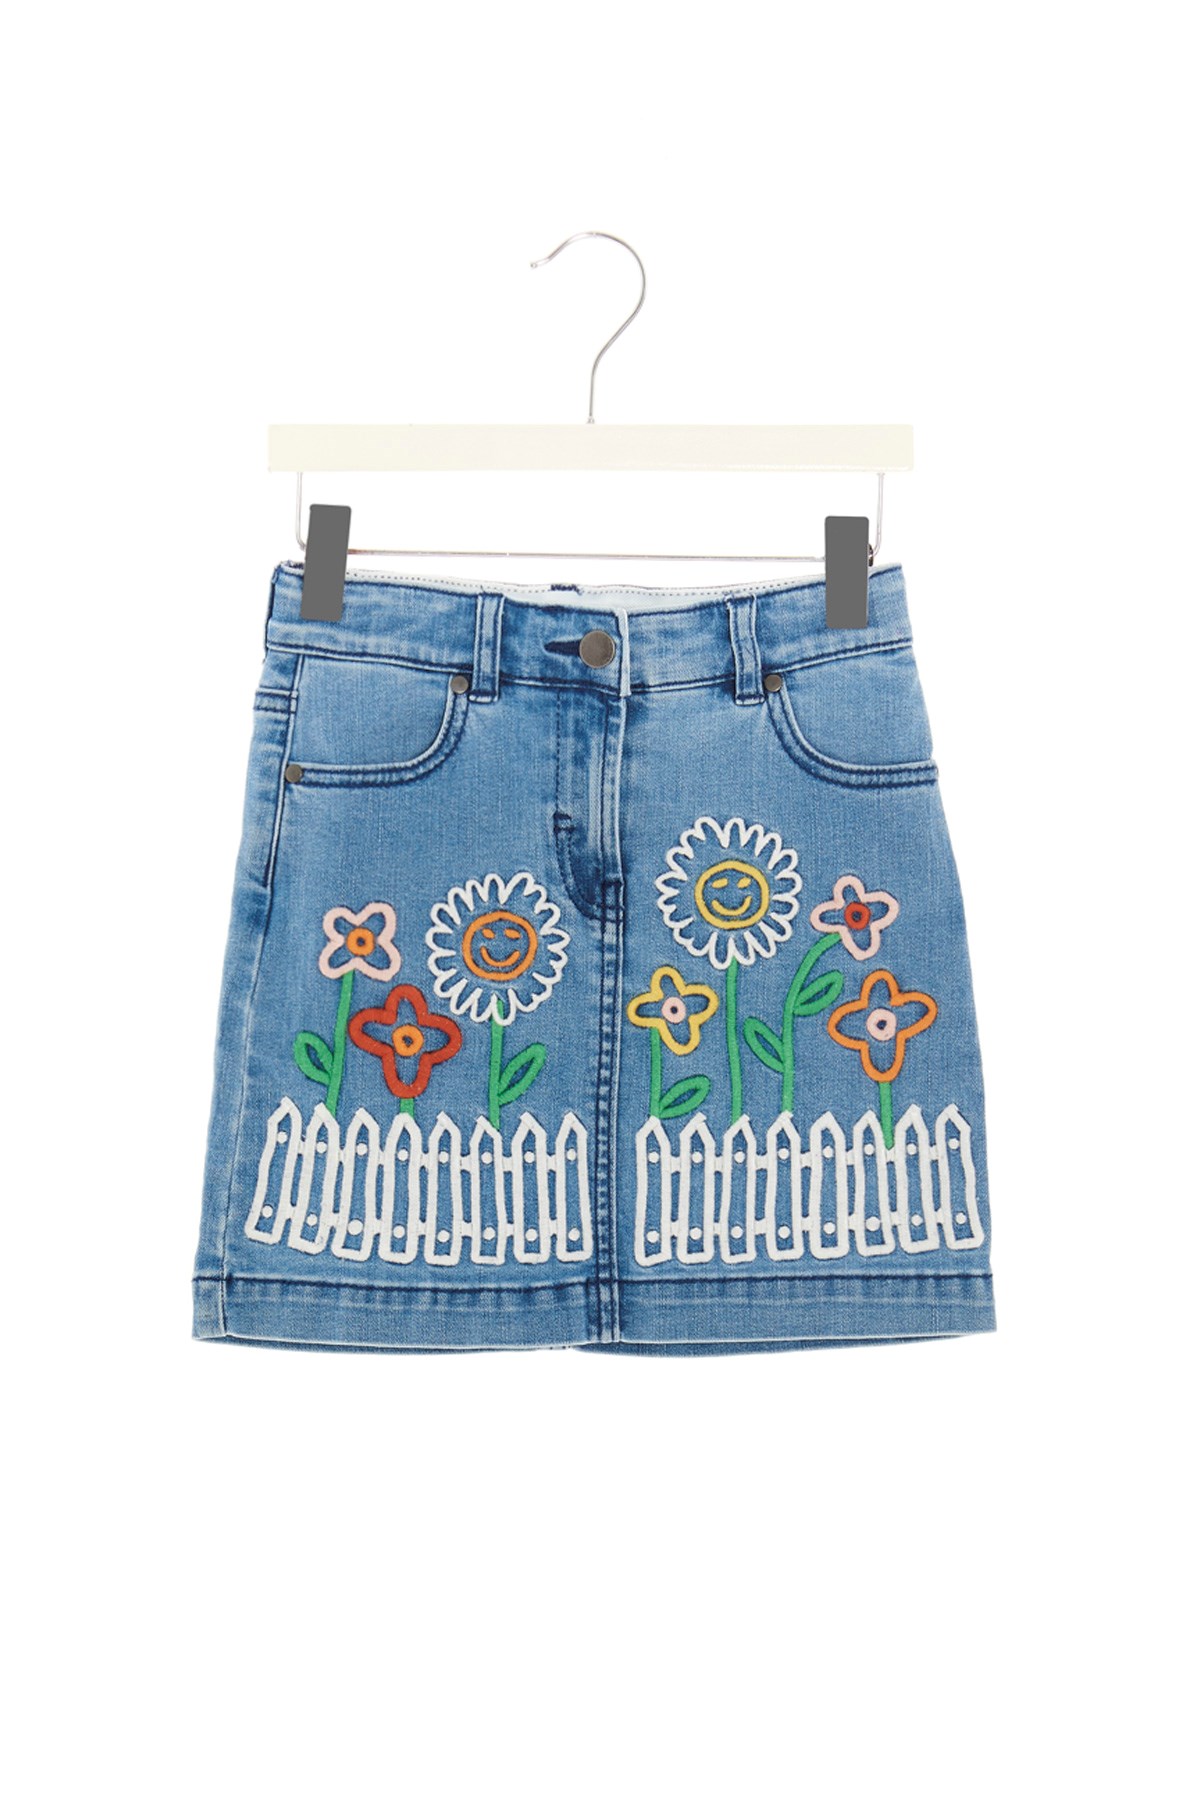 STELLA MCCARTNEY 'Garden' Denim Skirt